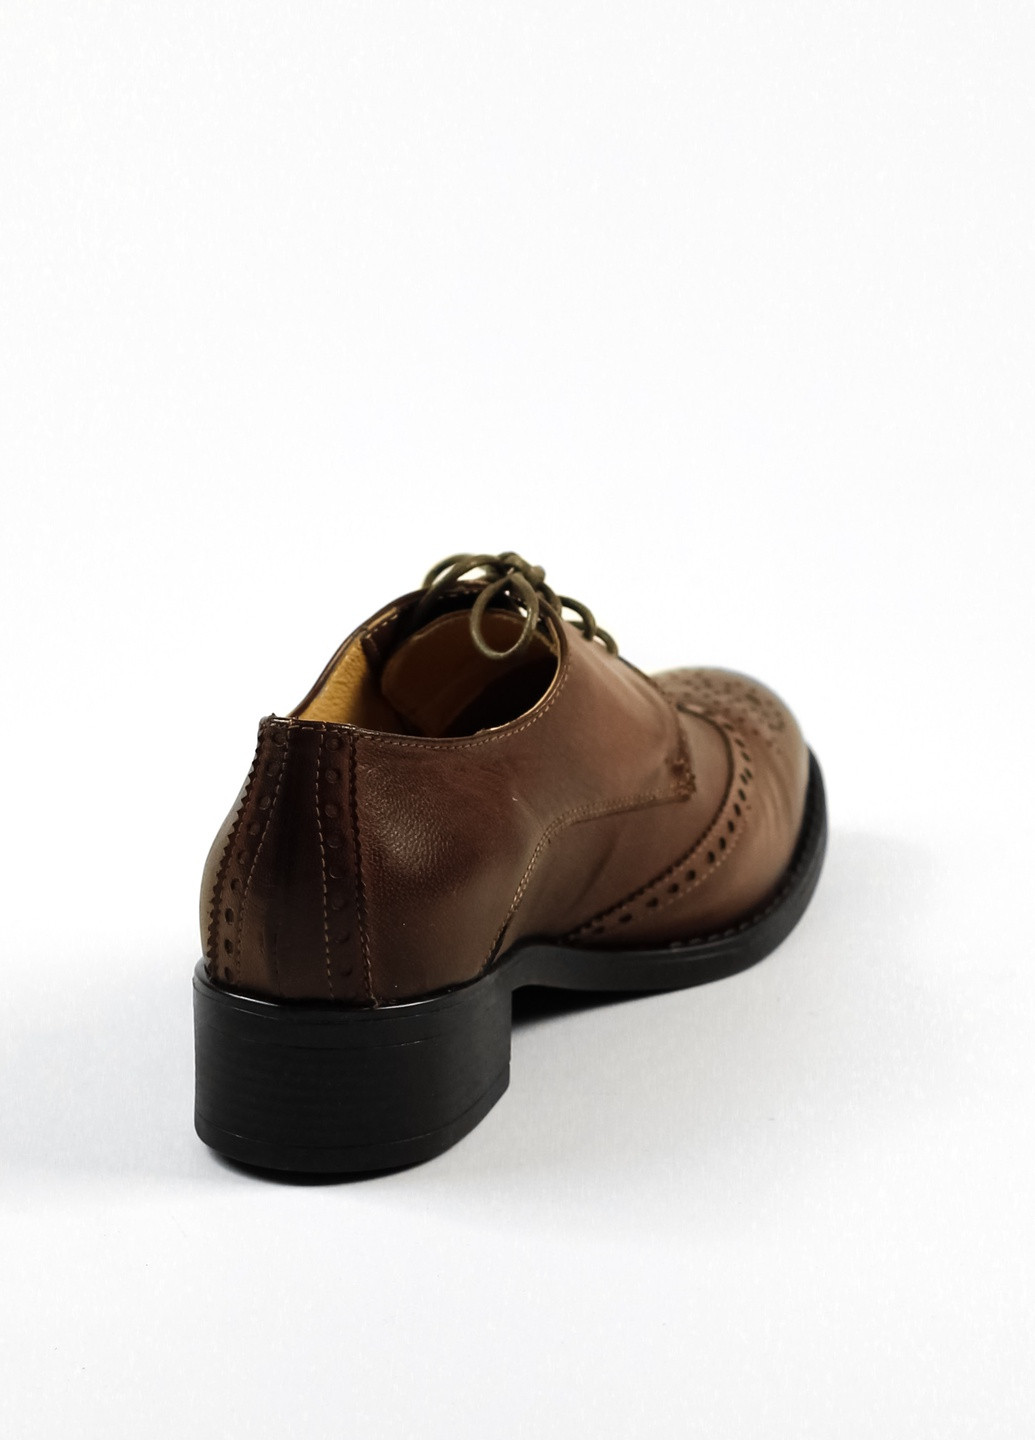 Туфли женские коричневые LanKars